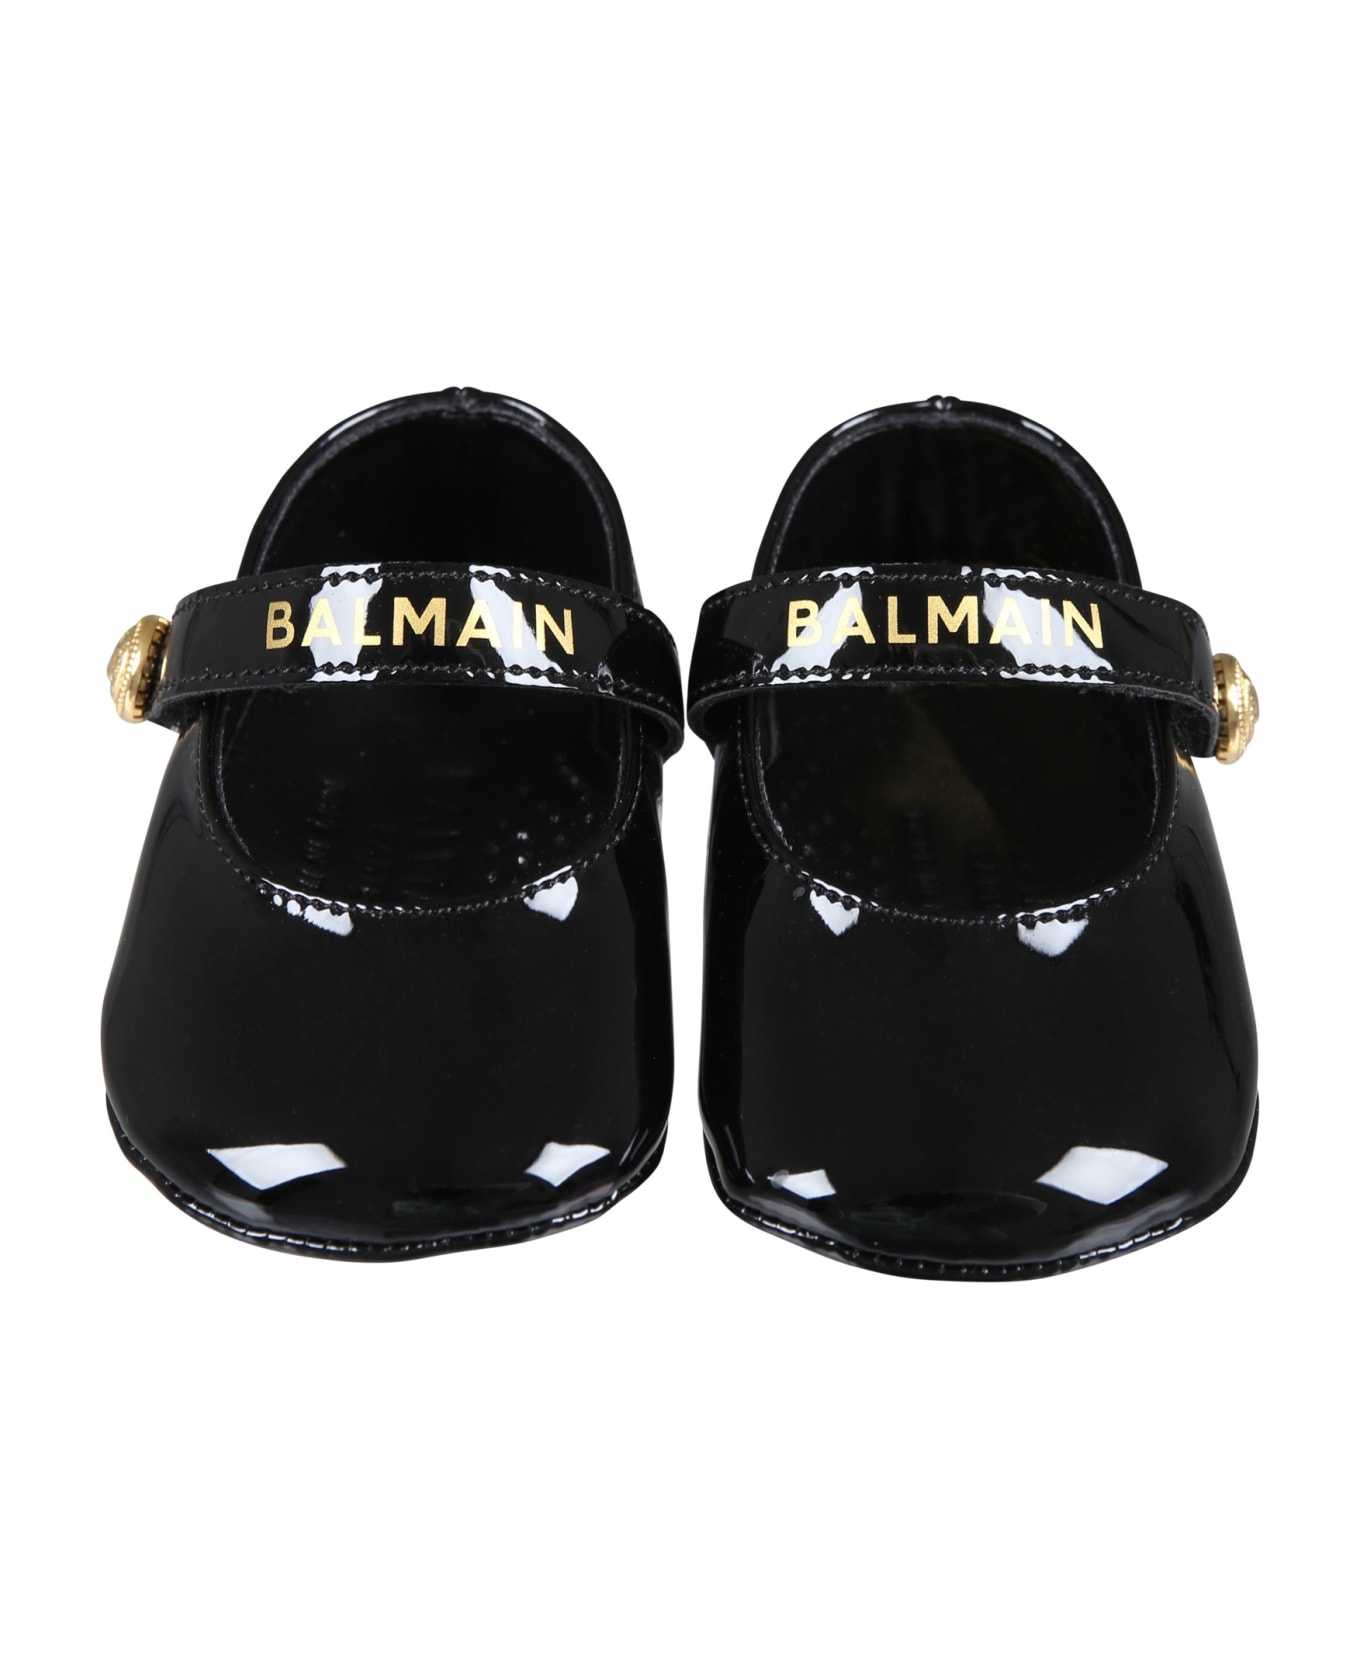 Balmain Black Ballet Flats For Baby Girl With Logo - Black